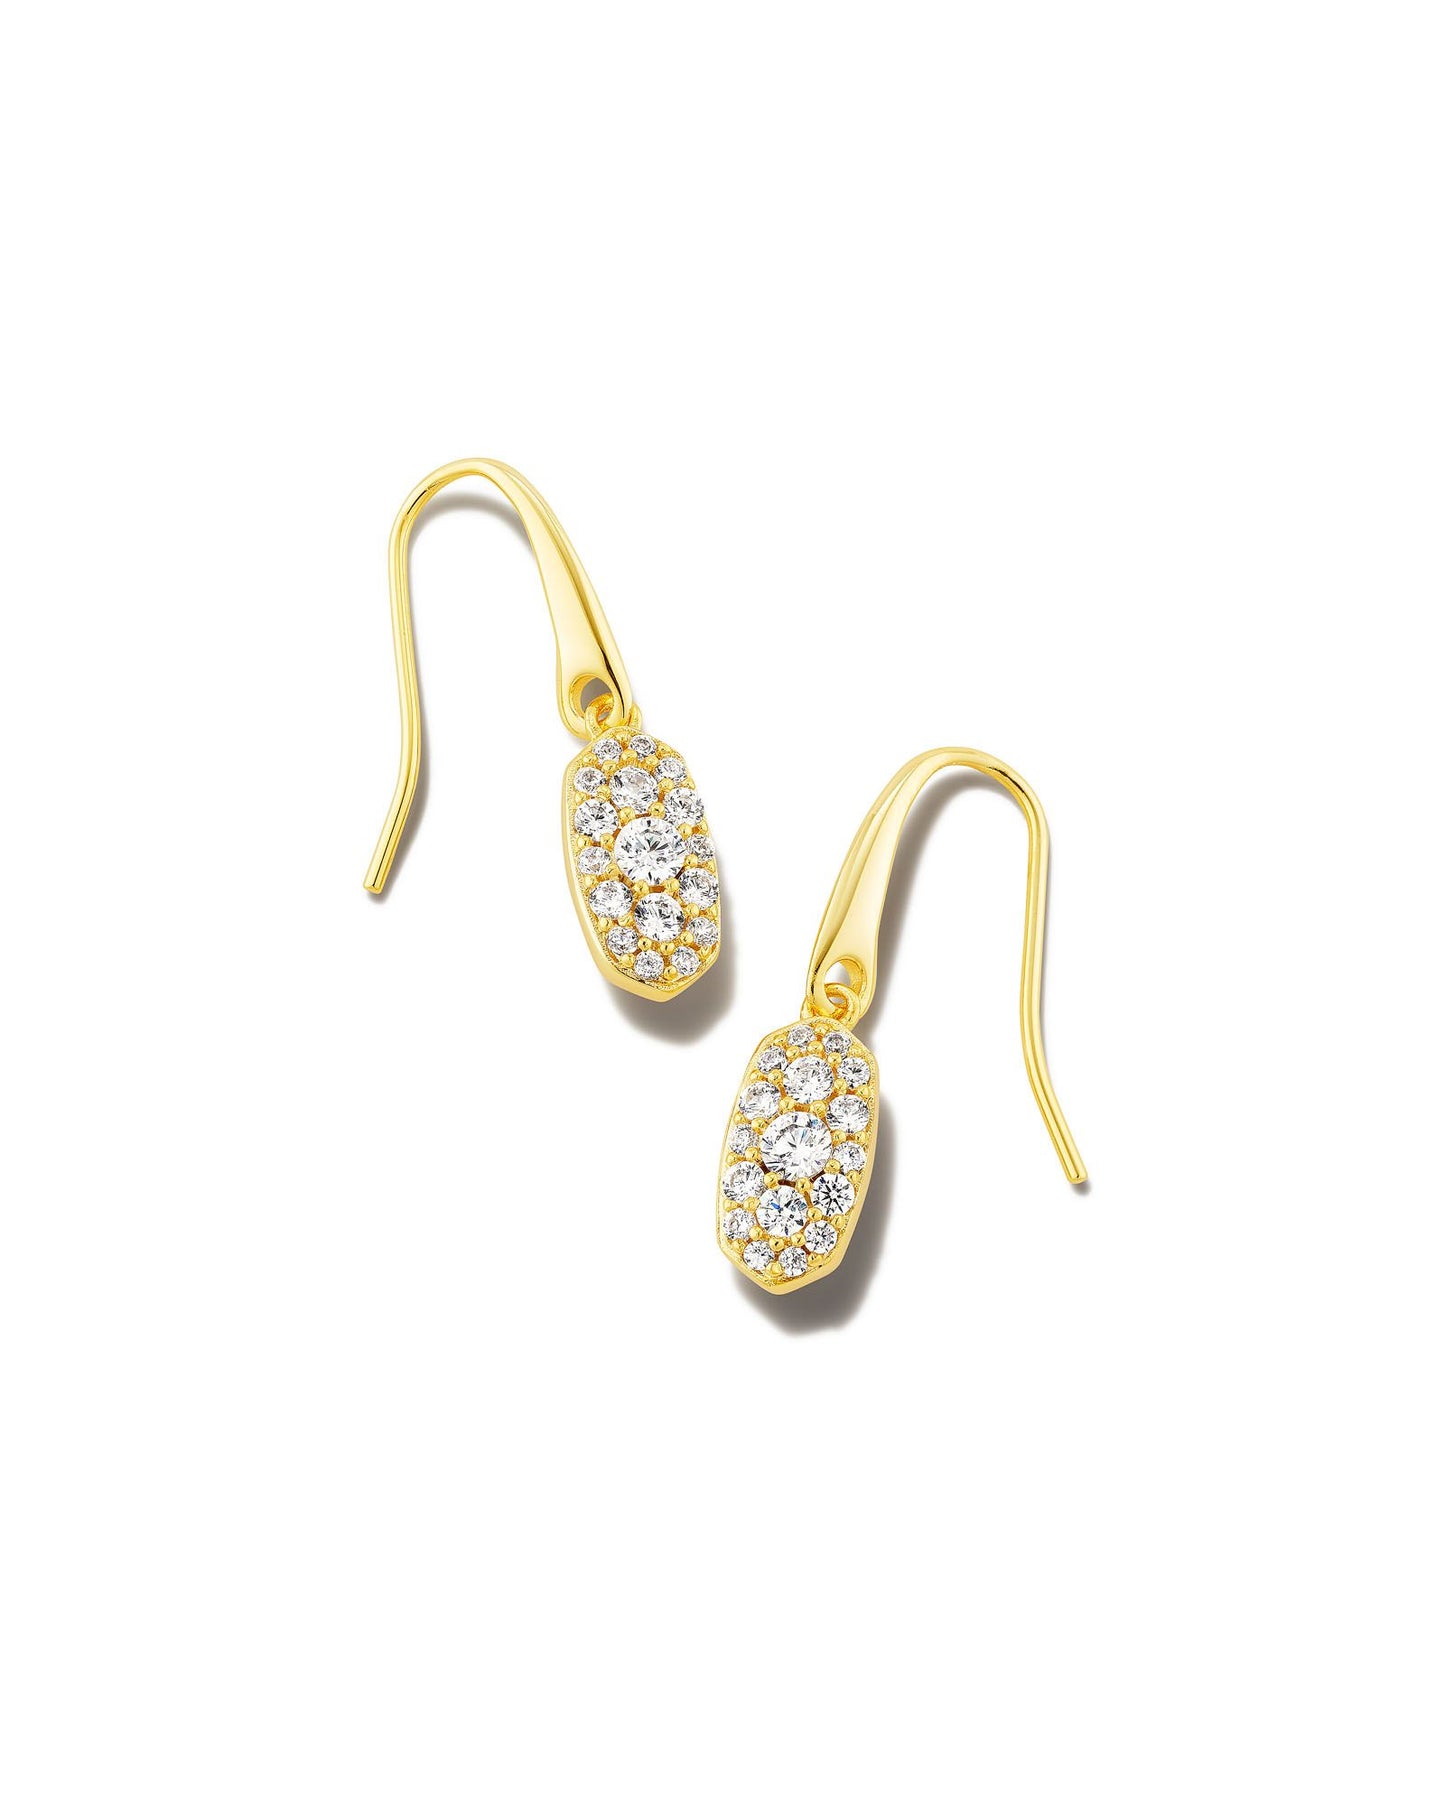 Grayson Gold Drop Earrings in White Crystal | KENDRA SCOTT - The Street Boutique 